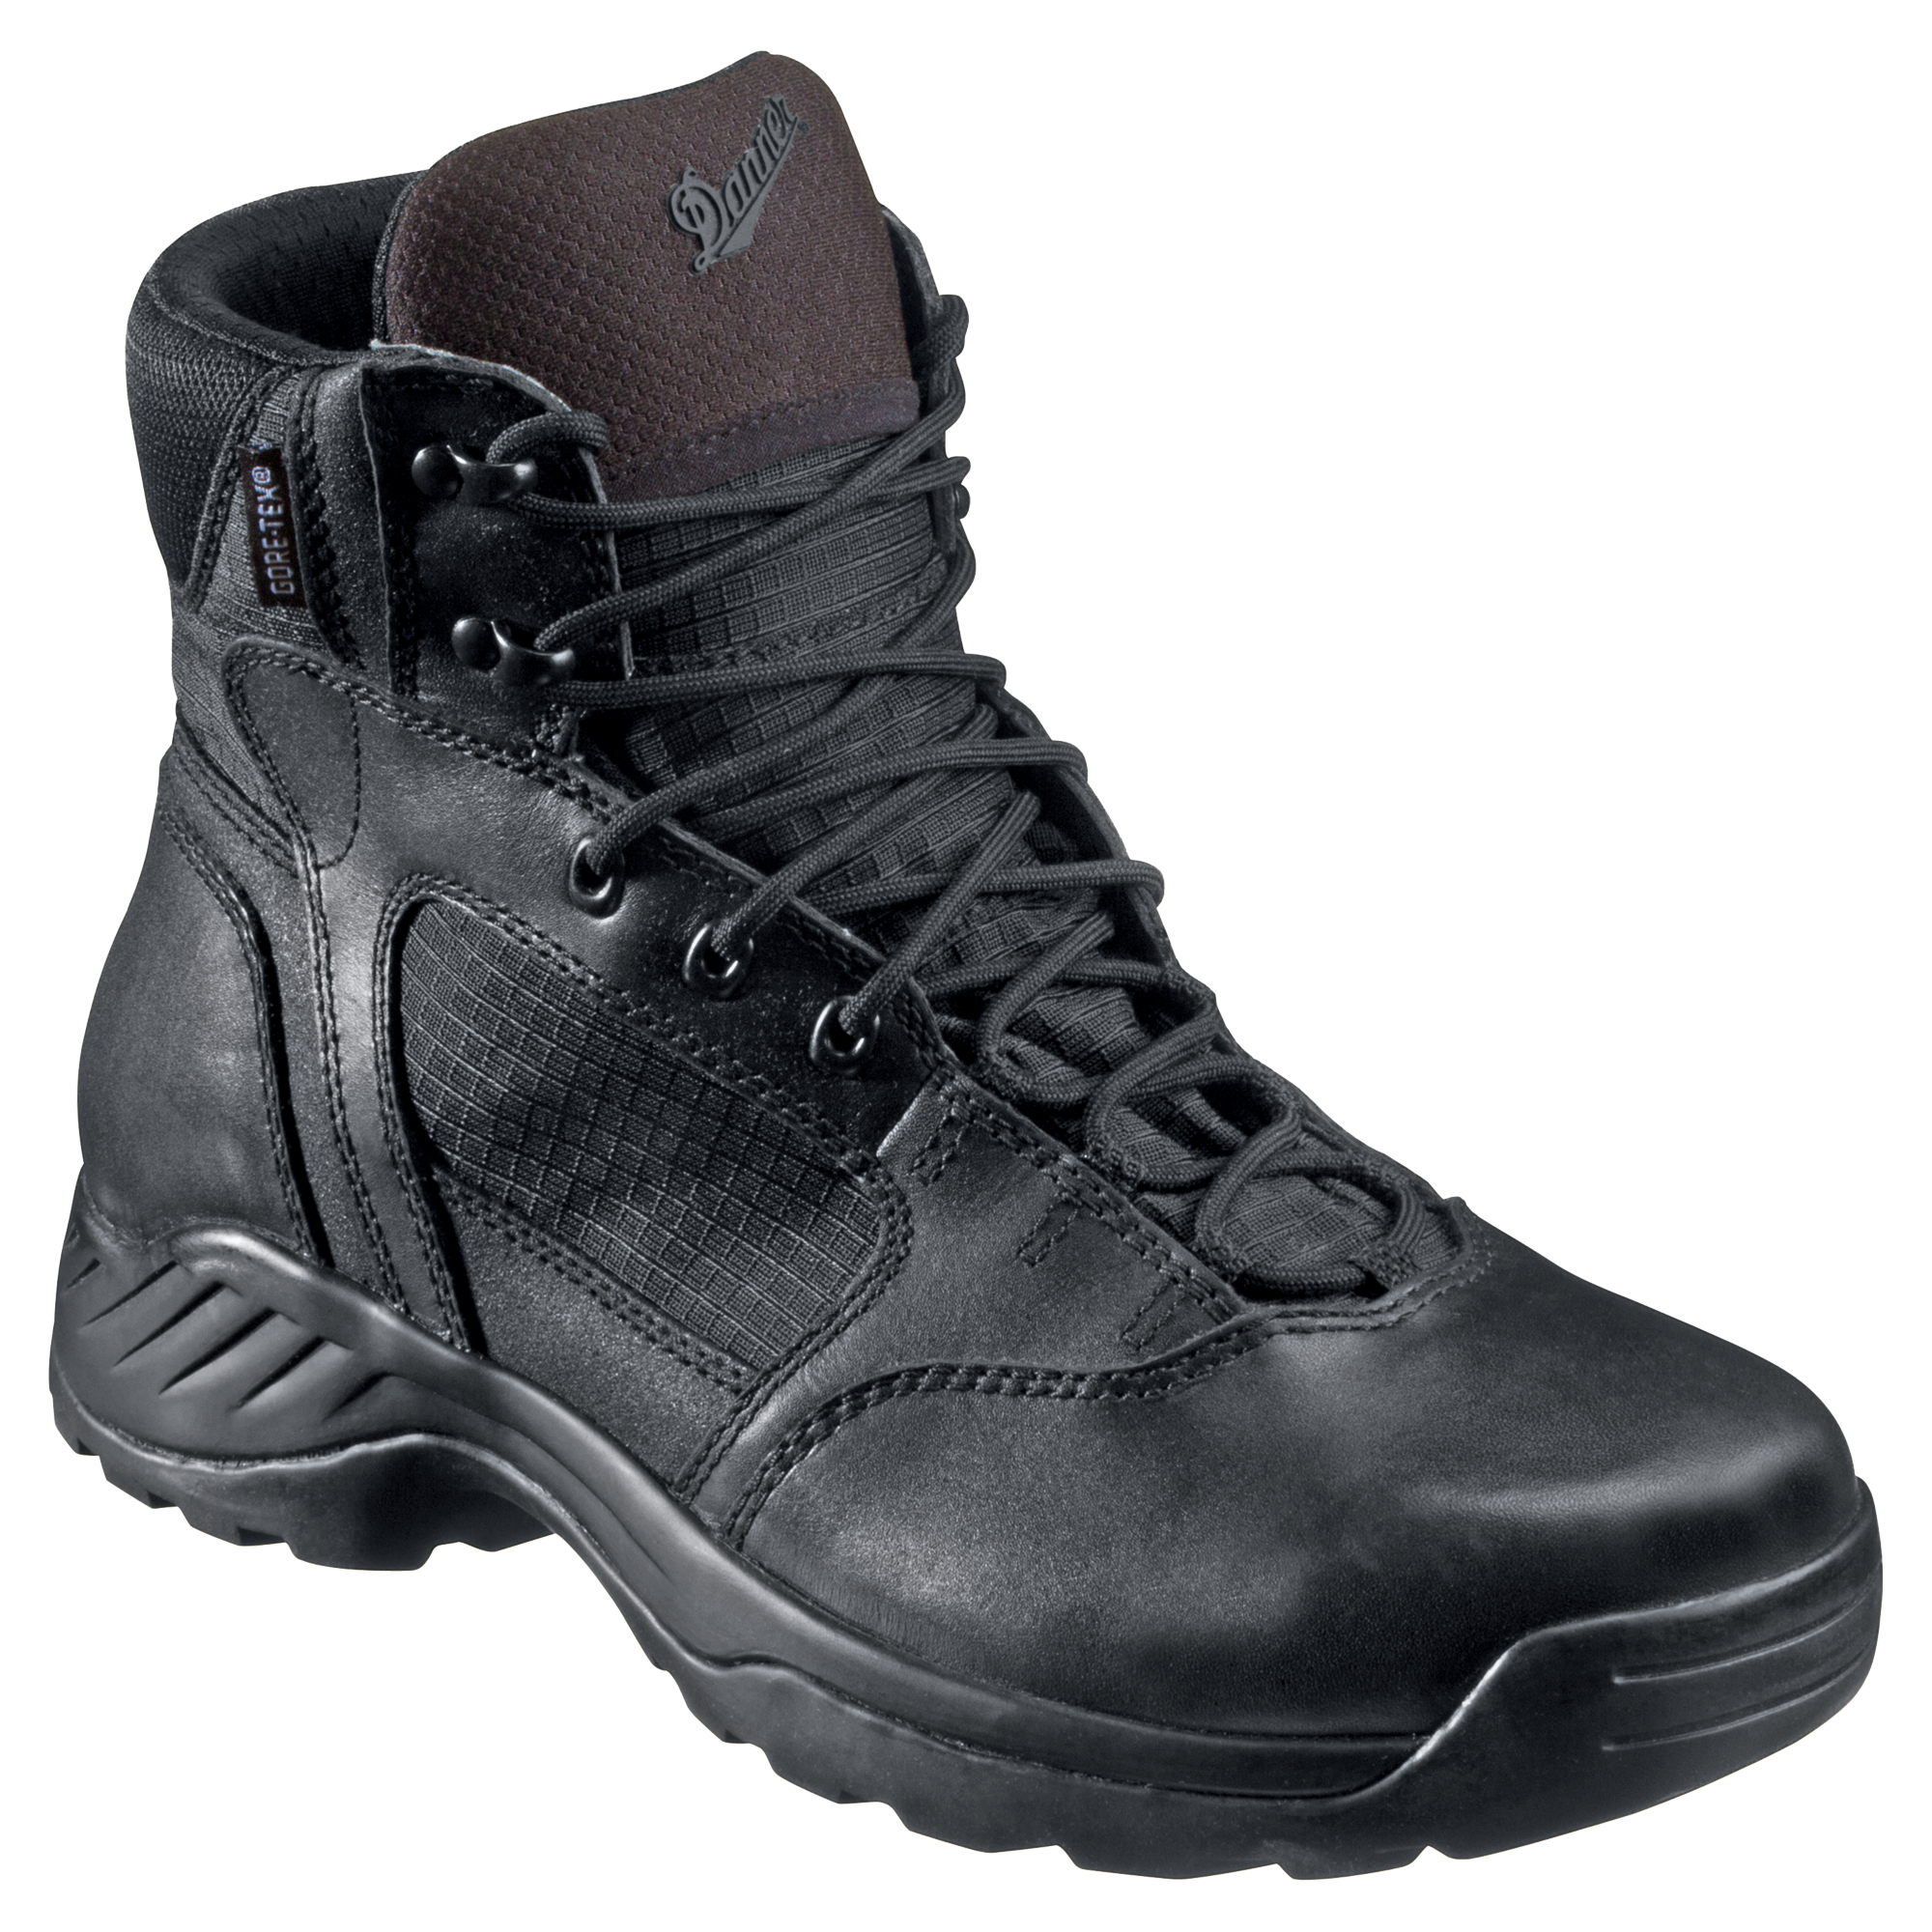 Danner Kinetic Side-Zip GORE-TEX Work Boots for Men - Black - 14W